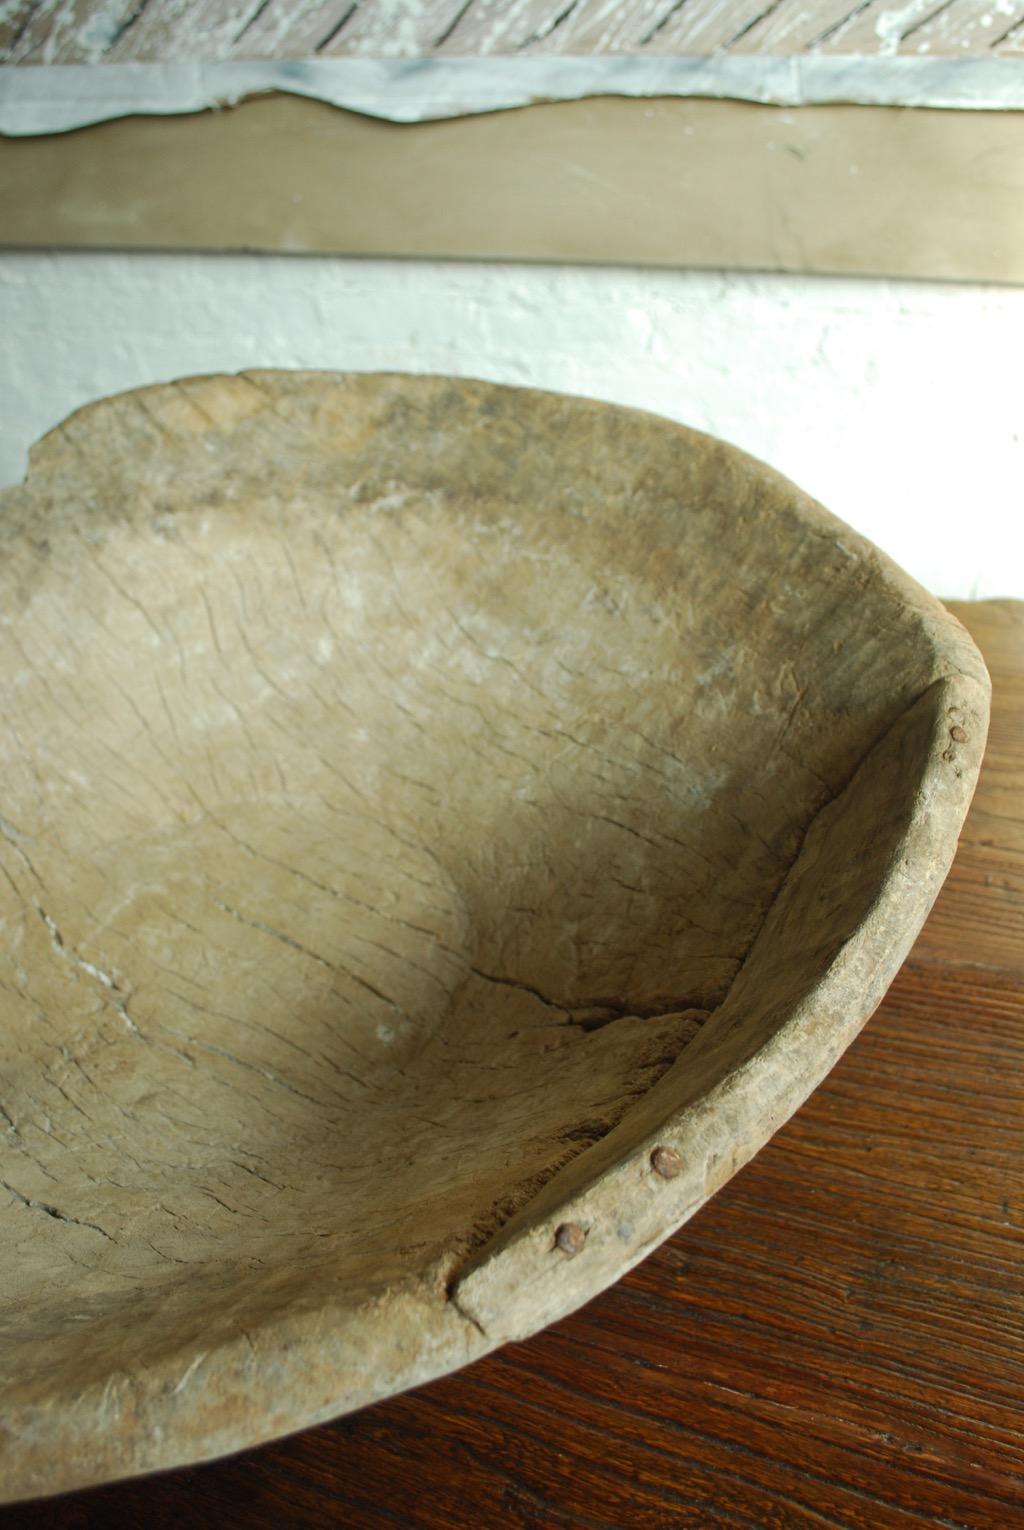 19th Century Pennsylvania Dutch weathered grain bowl.